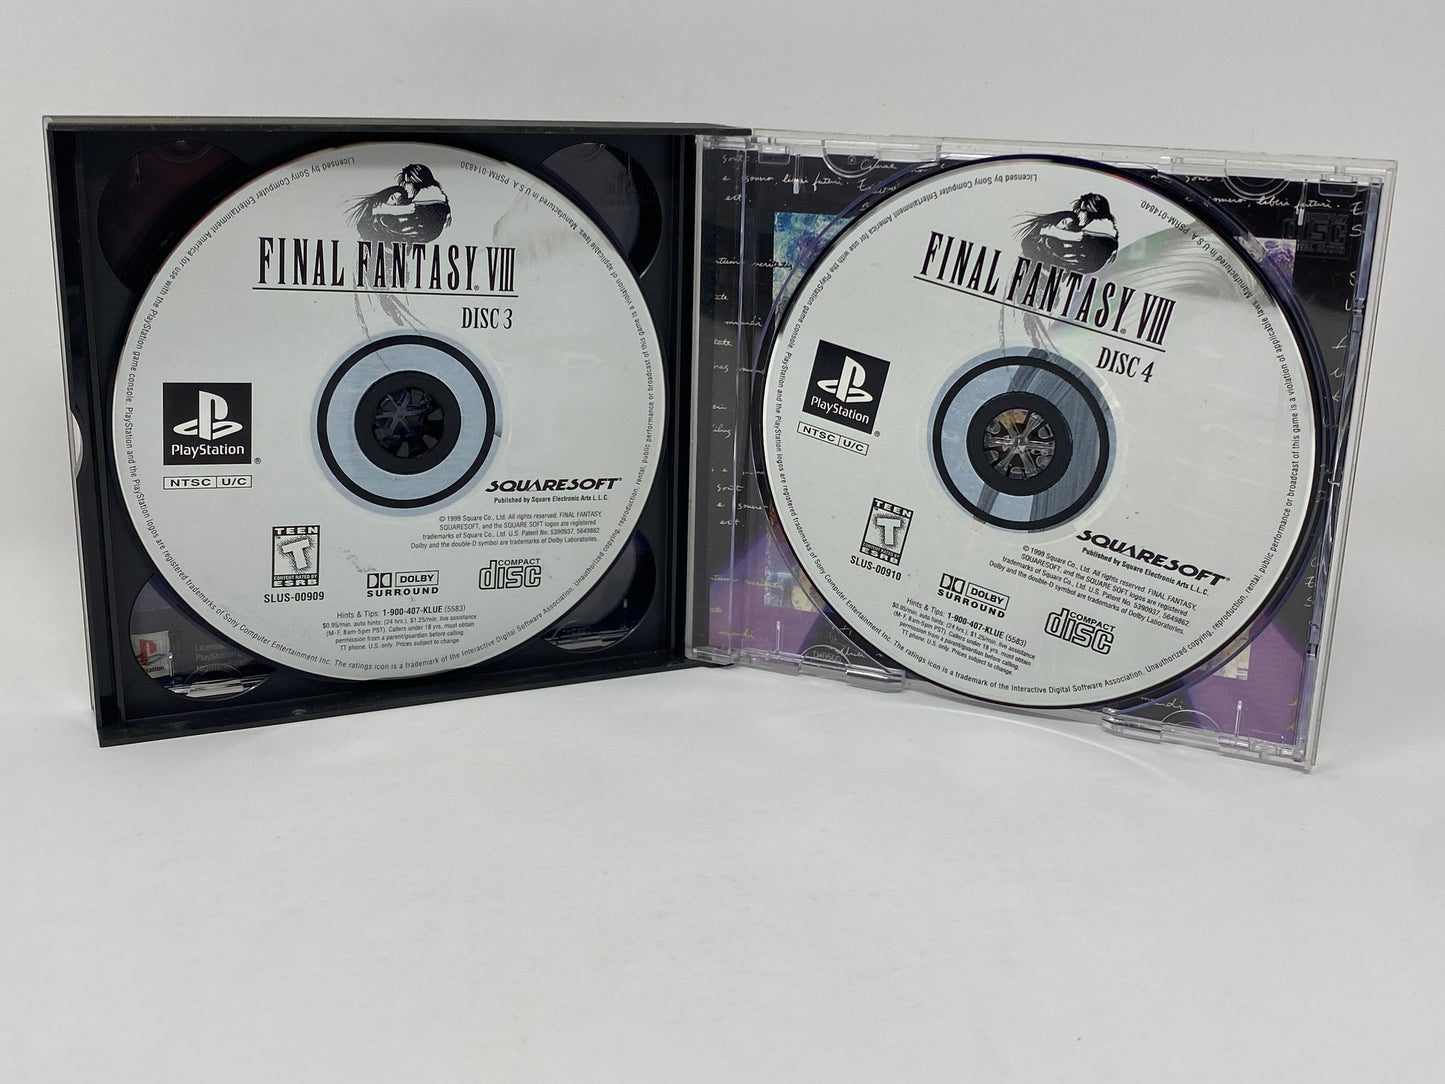 Sony PlayStation - Final Fantasy VIII 8